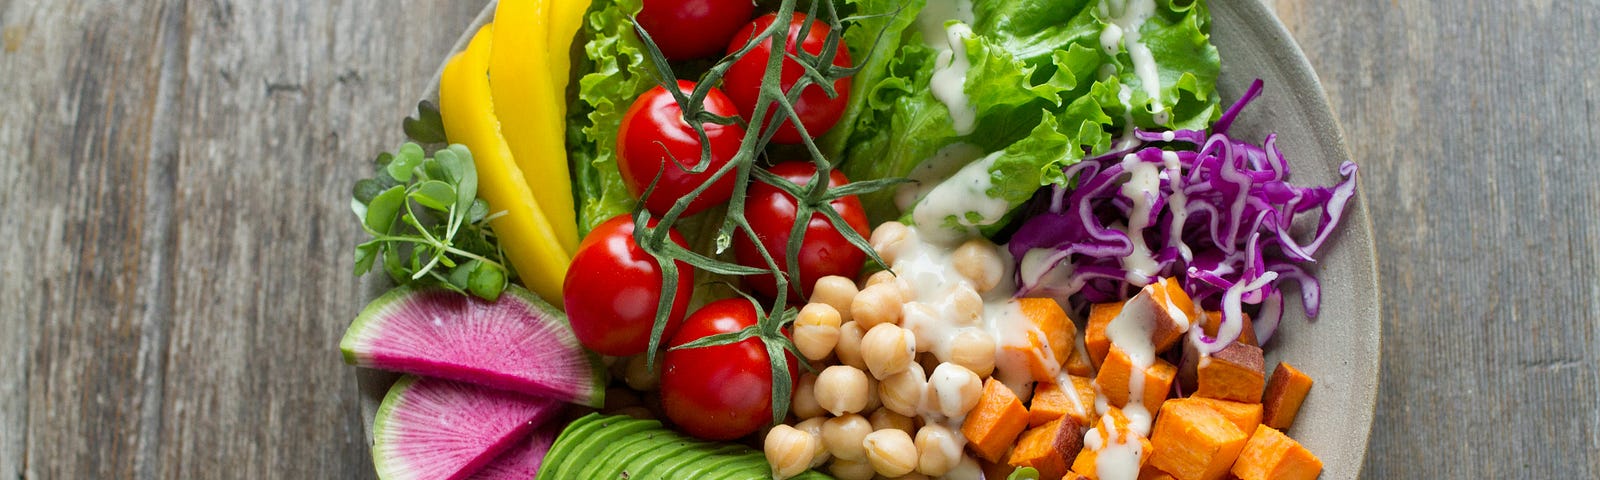 A colorful veggie salad